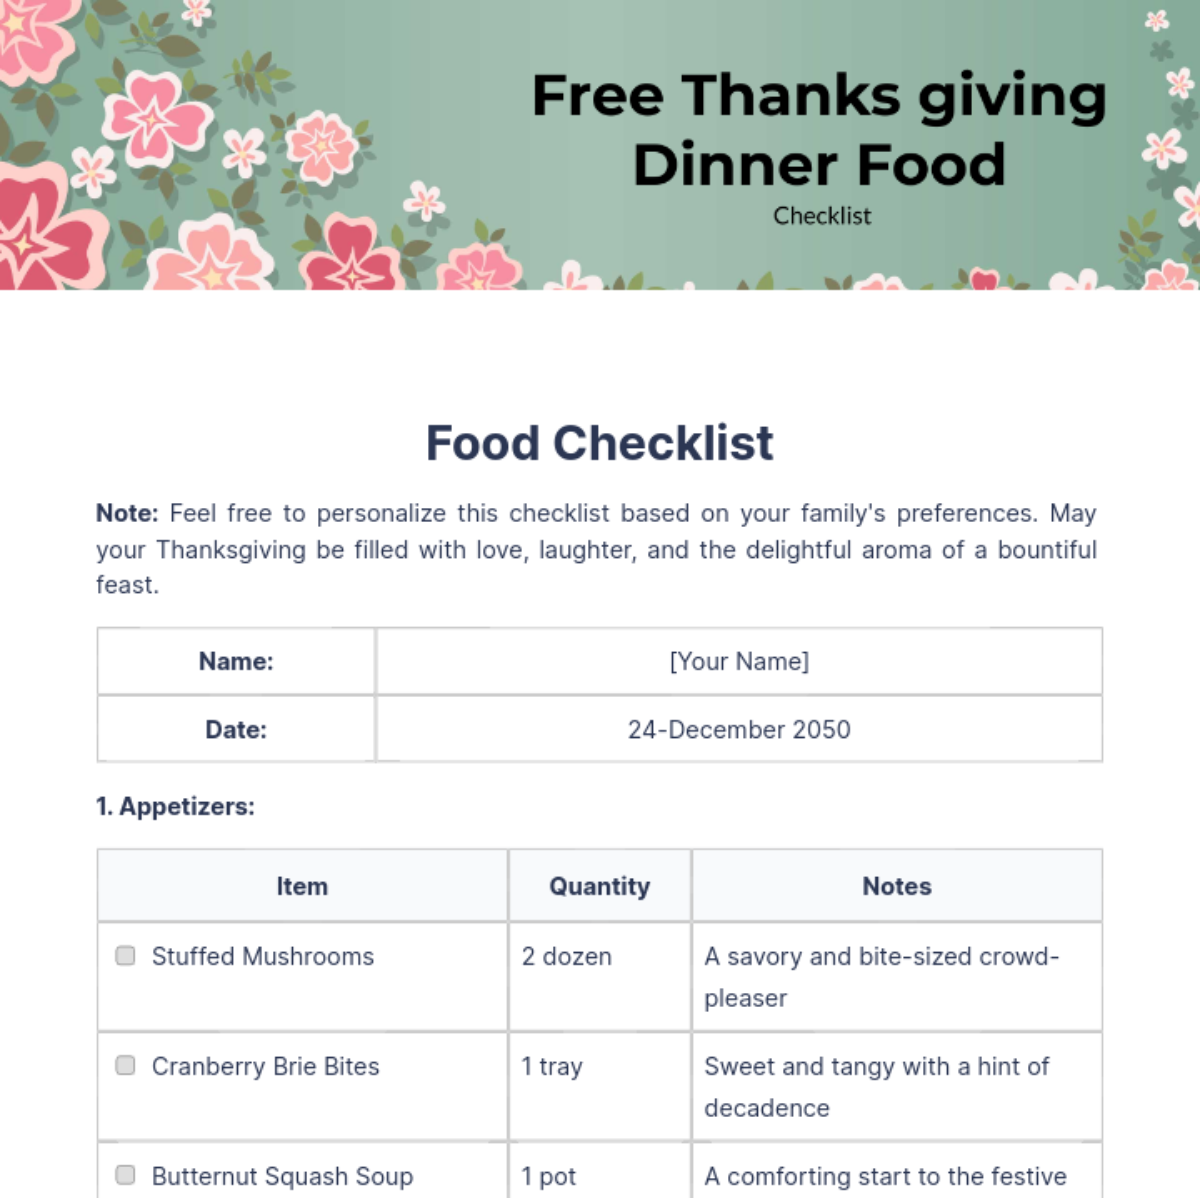 Free Thanksgiving Dinner Food Checklist Template